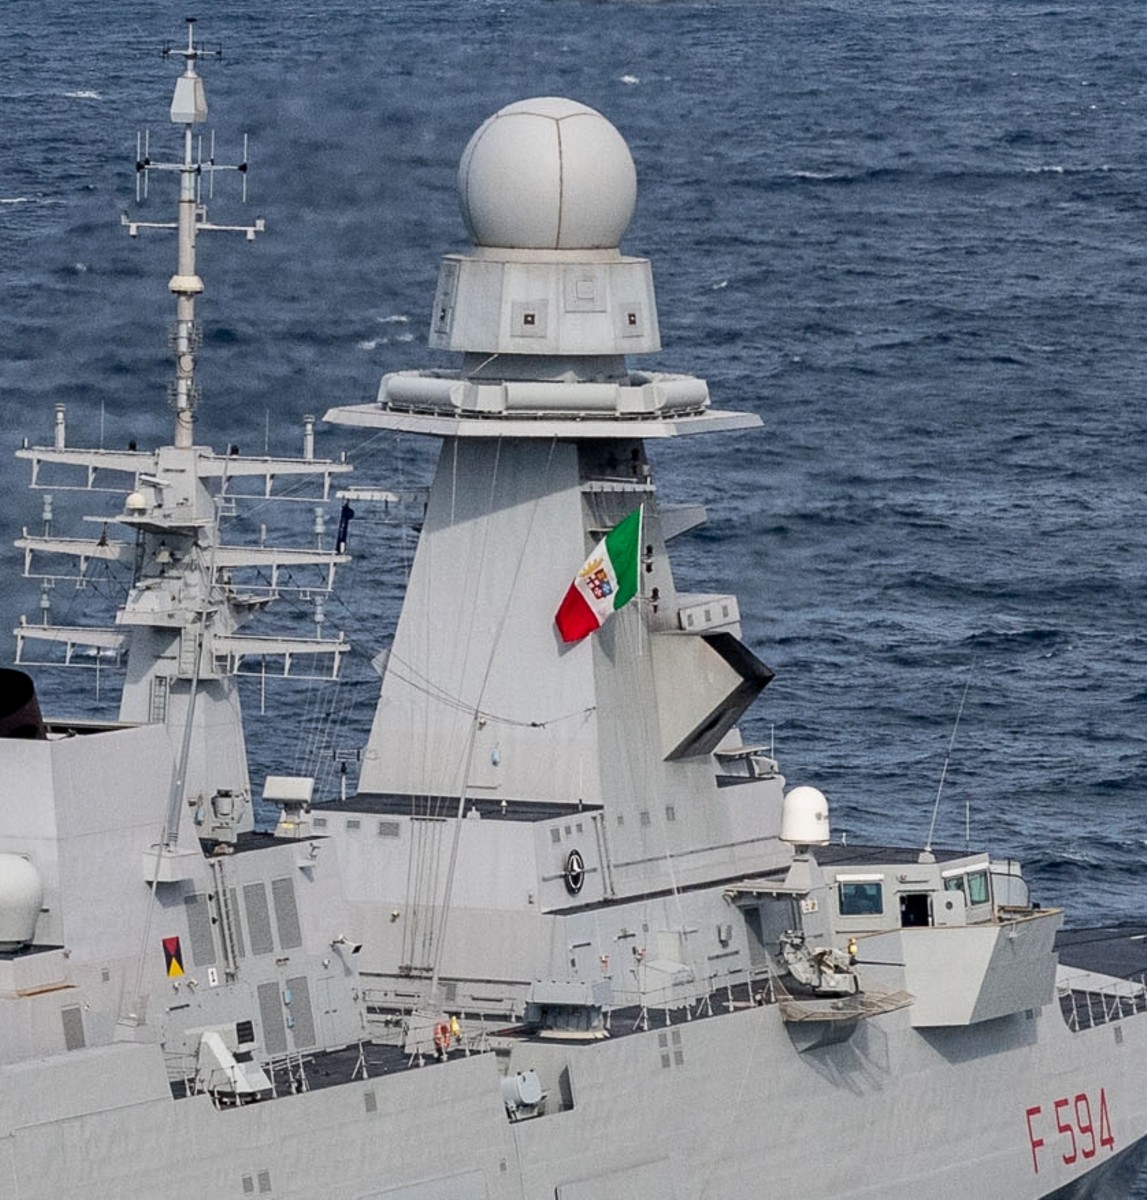 f-594 alpino its nave bergamini fremm class guided missile frigate italian navy marina militare 12b